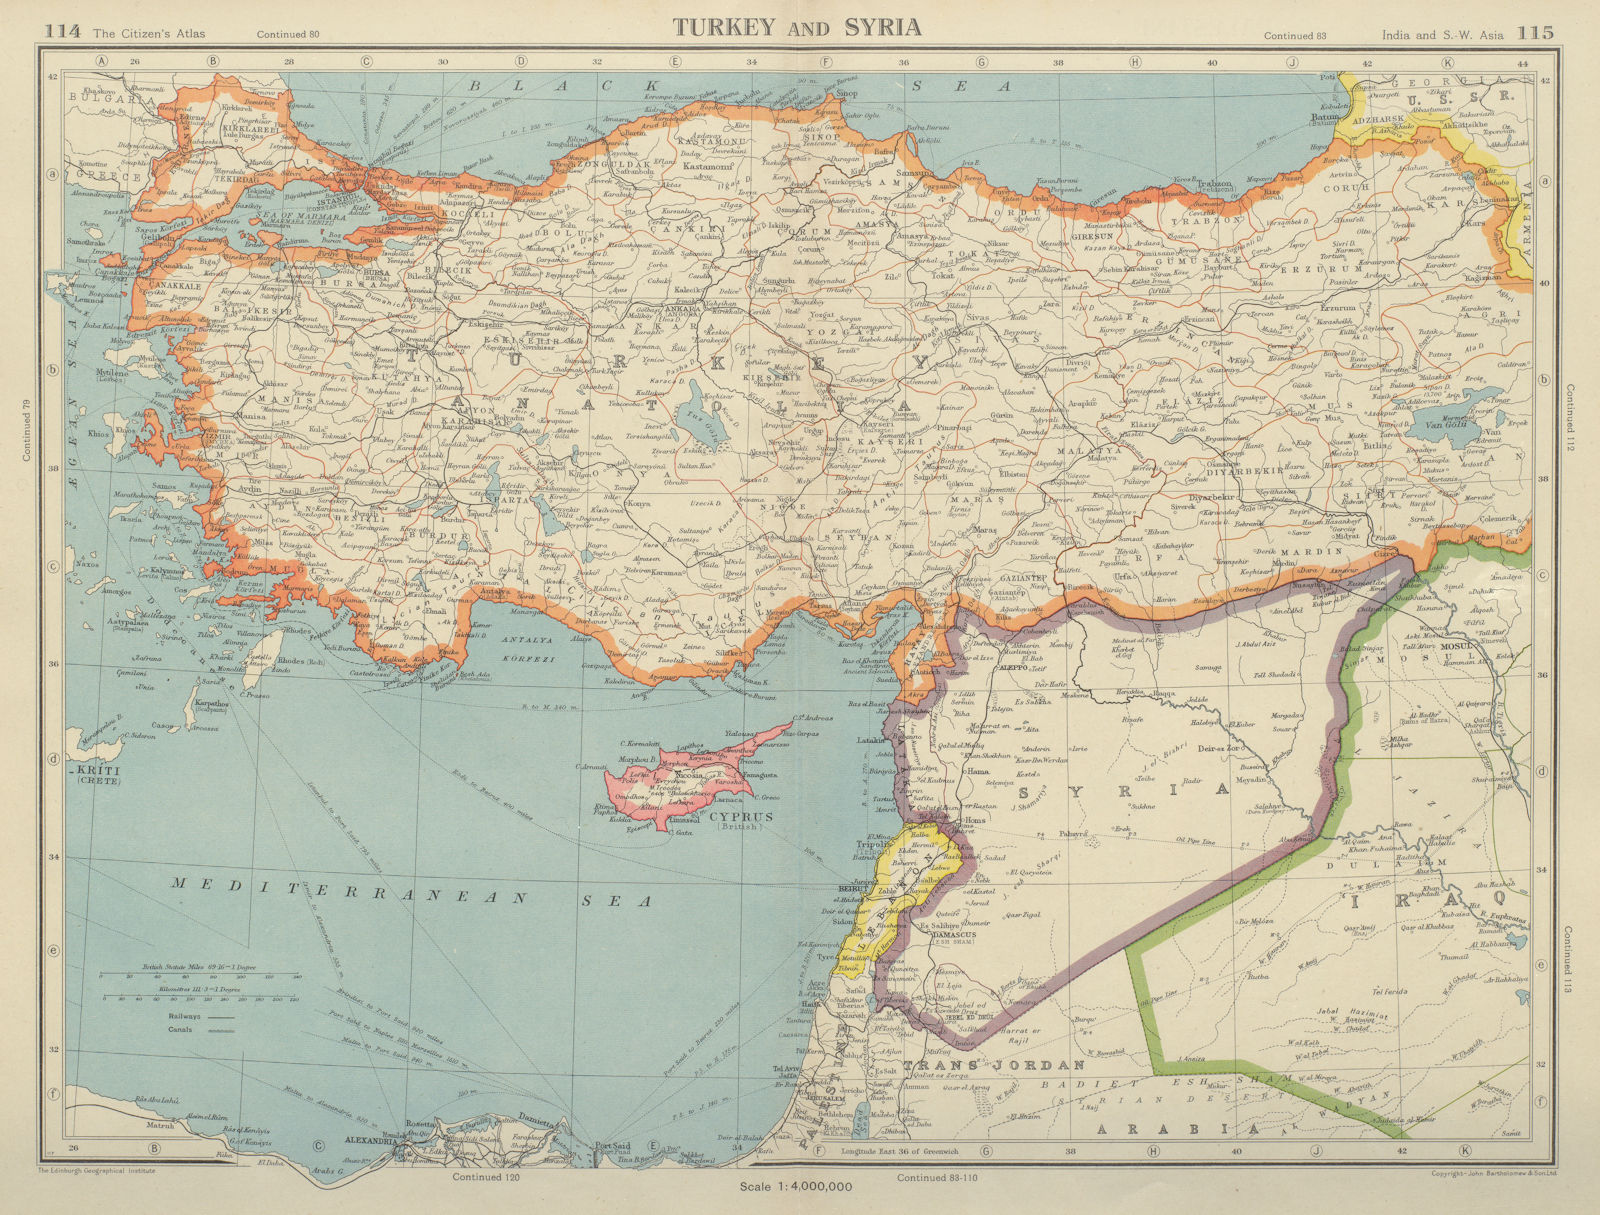 TURKEY & LEVANT. Newly-independent Lebanon. Syria. Palestine pre Israel 1947 map